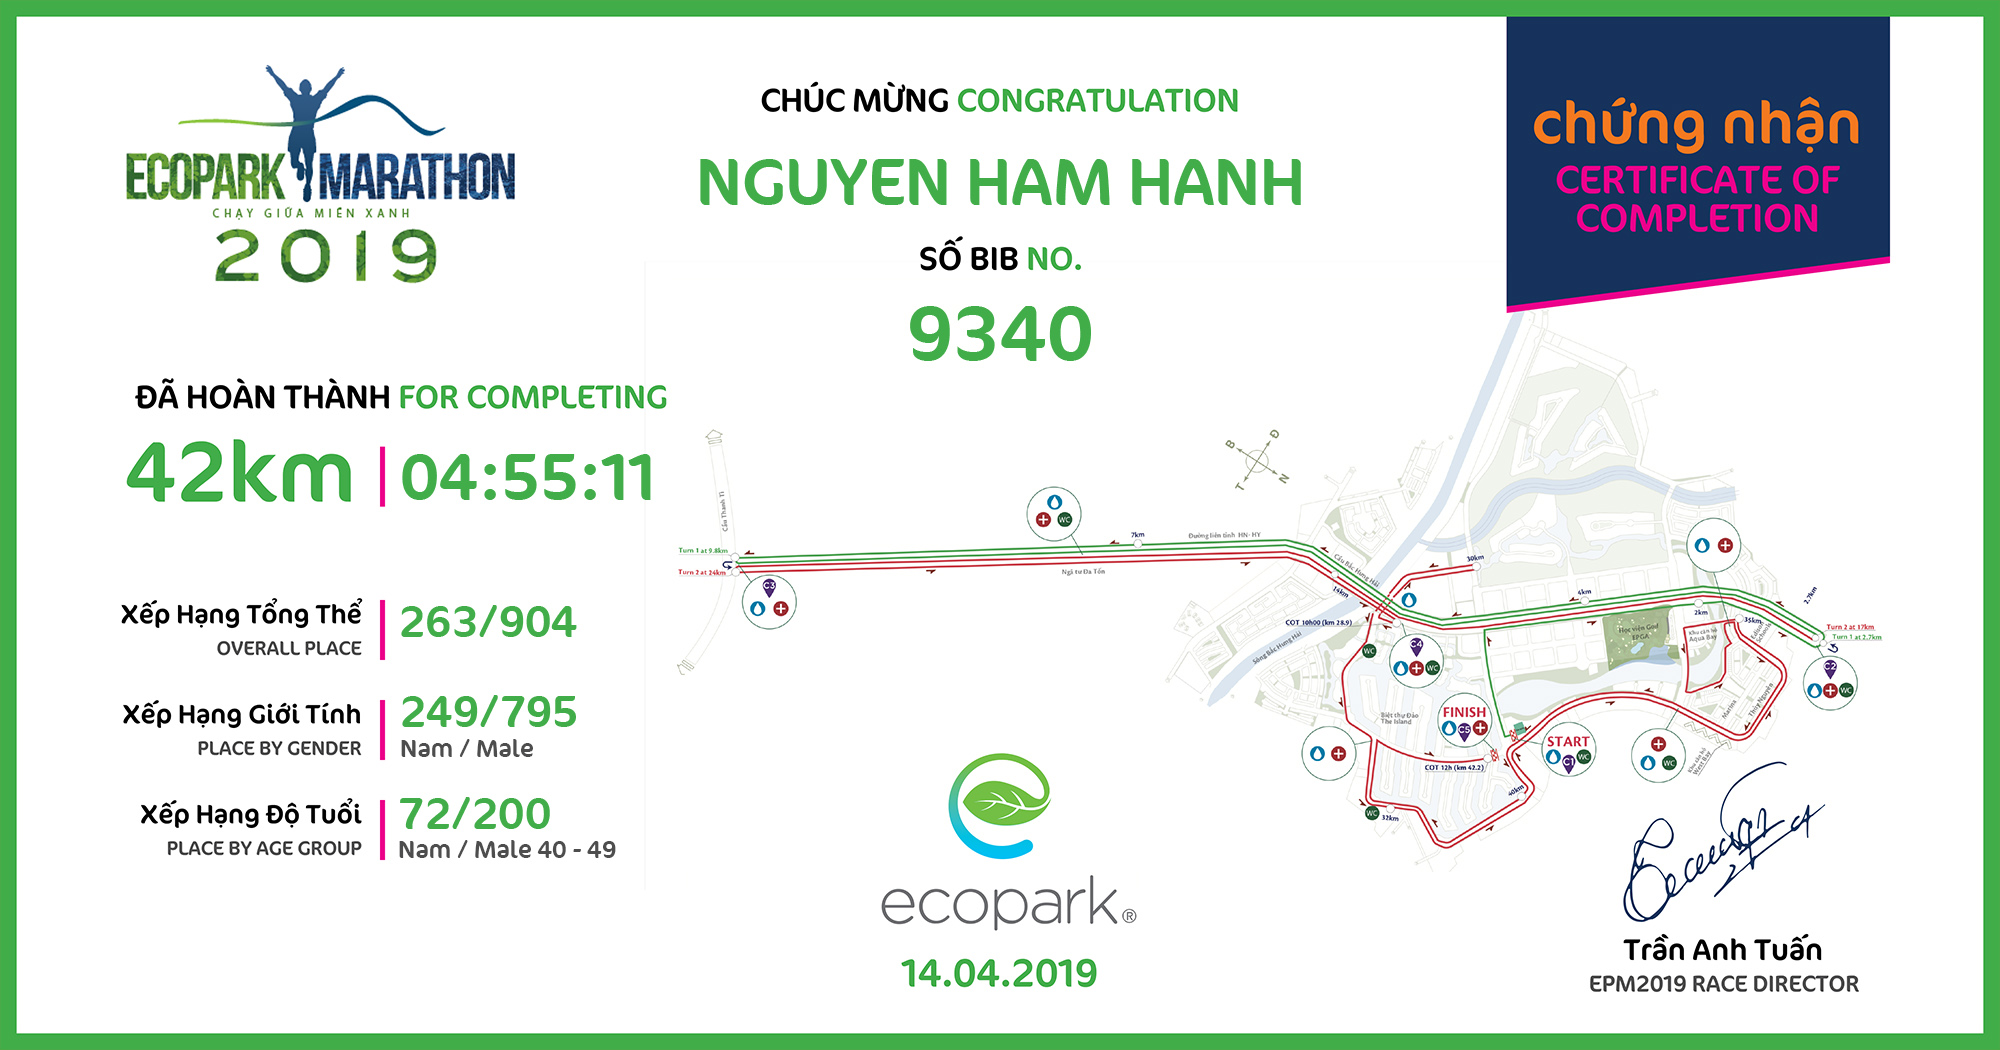 9340 - Nguyen Ham Hanh